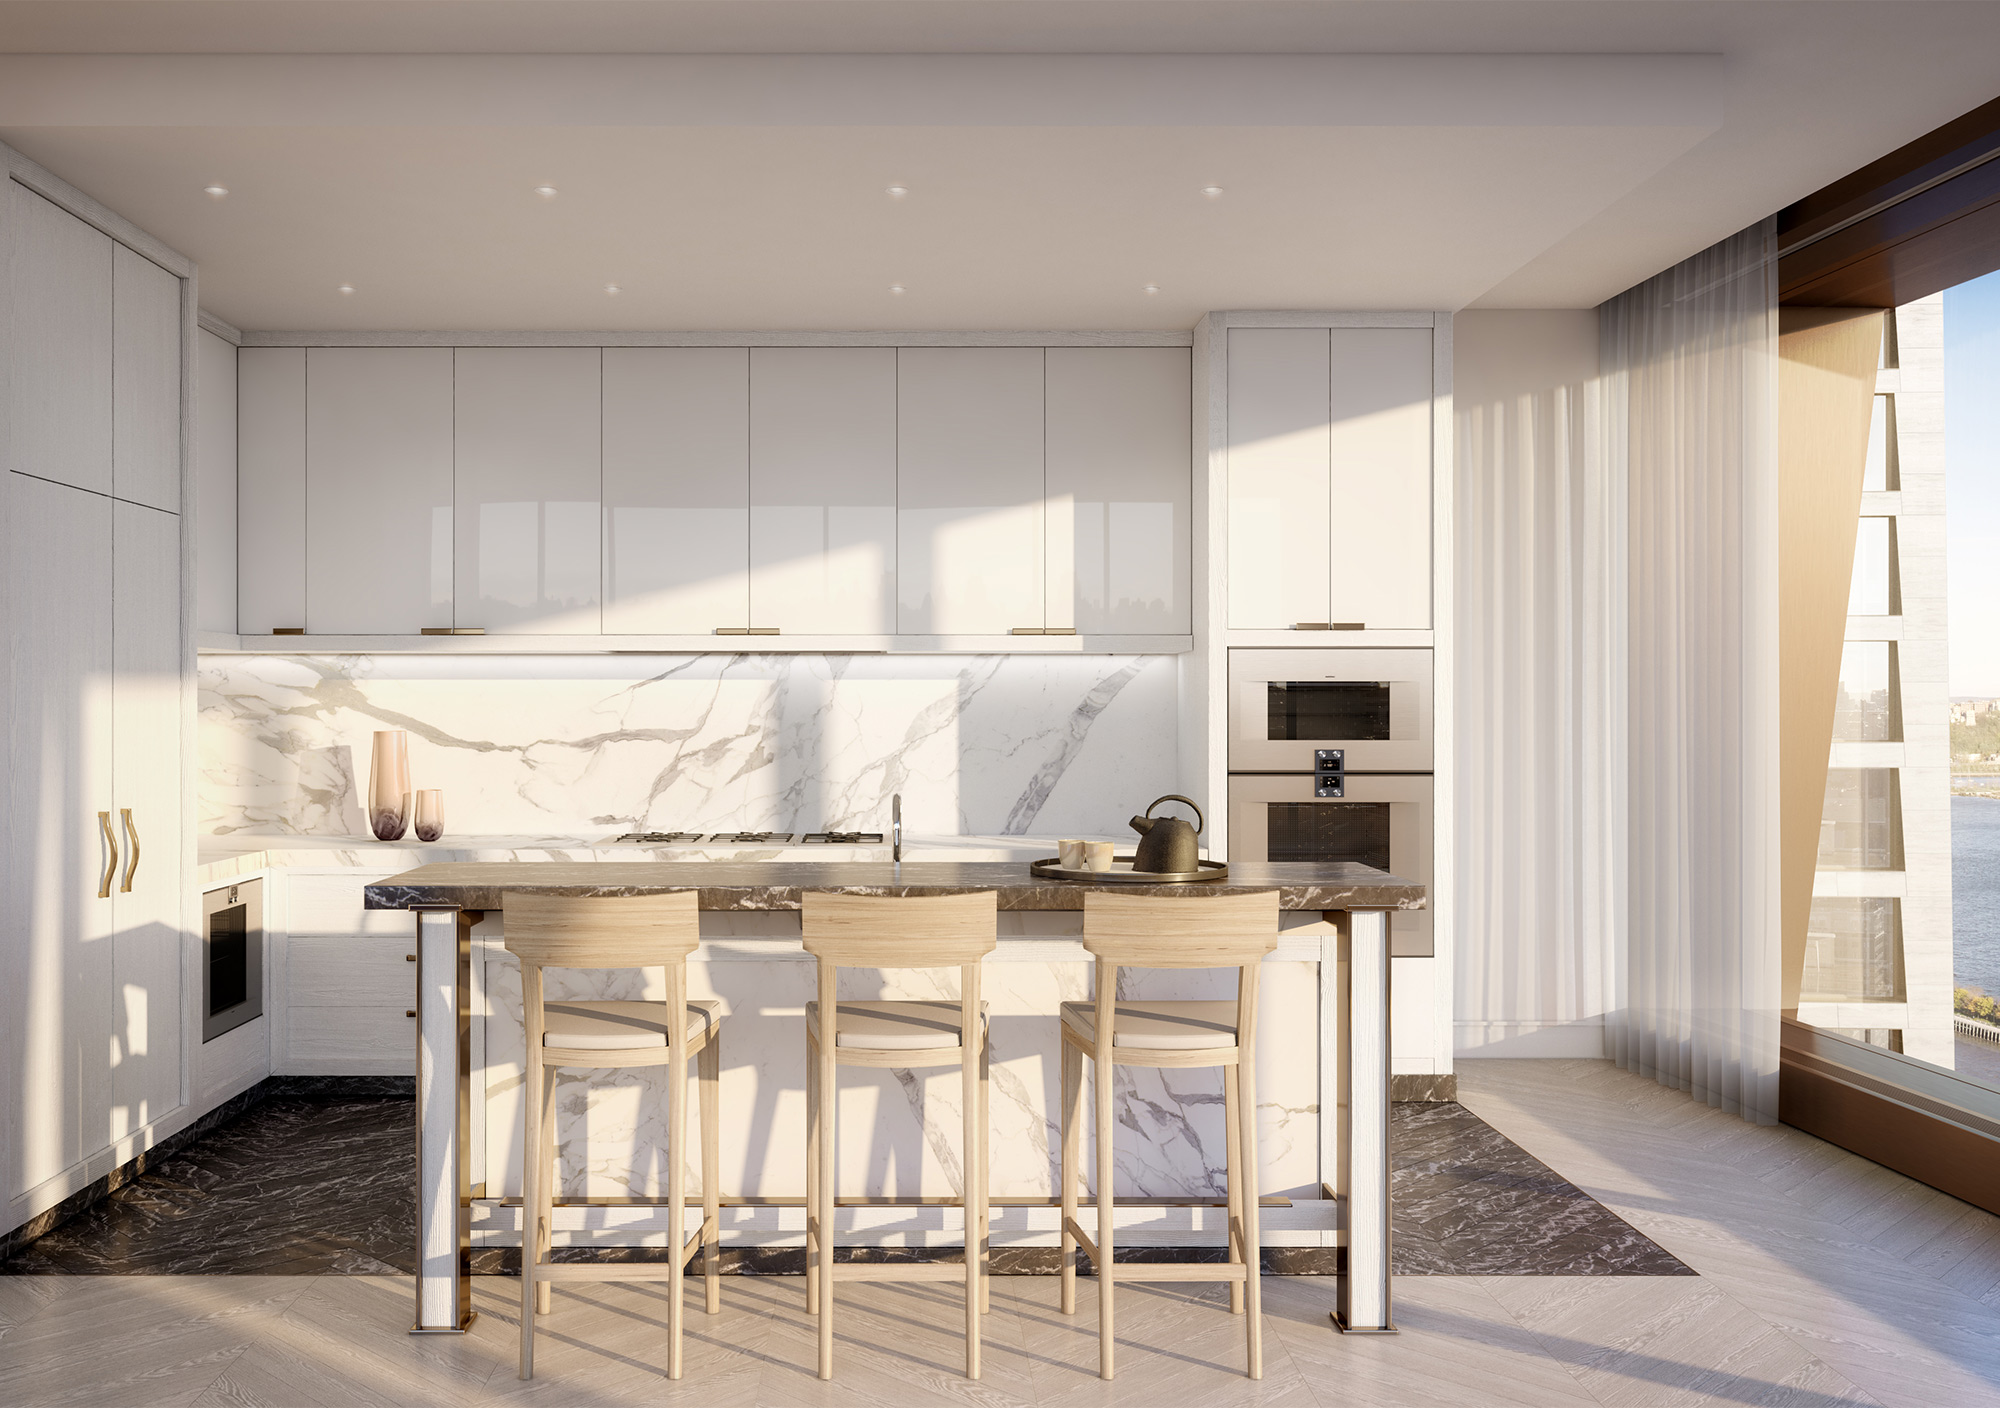 luxury kitchen interiors with morning light